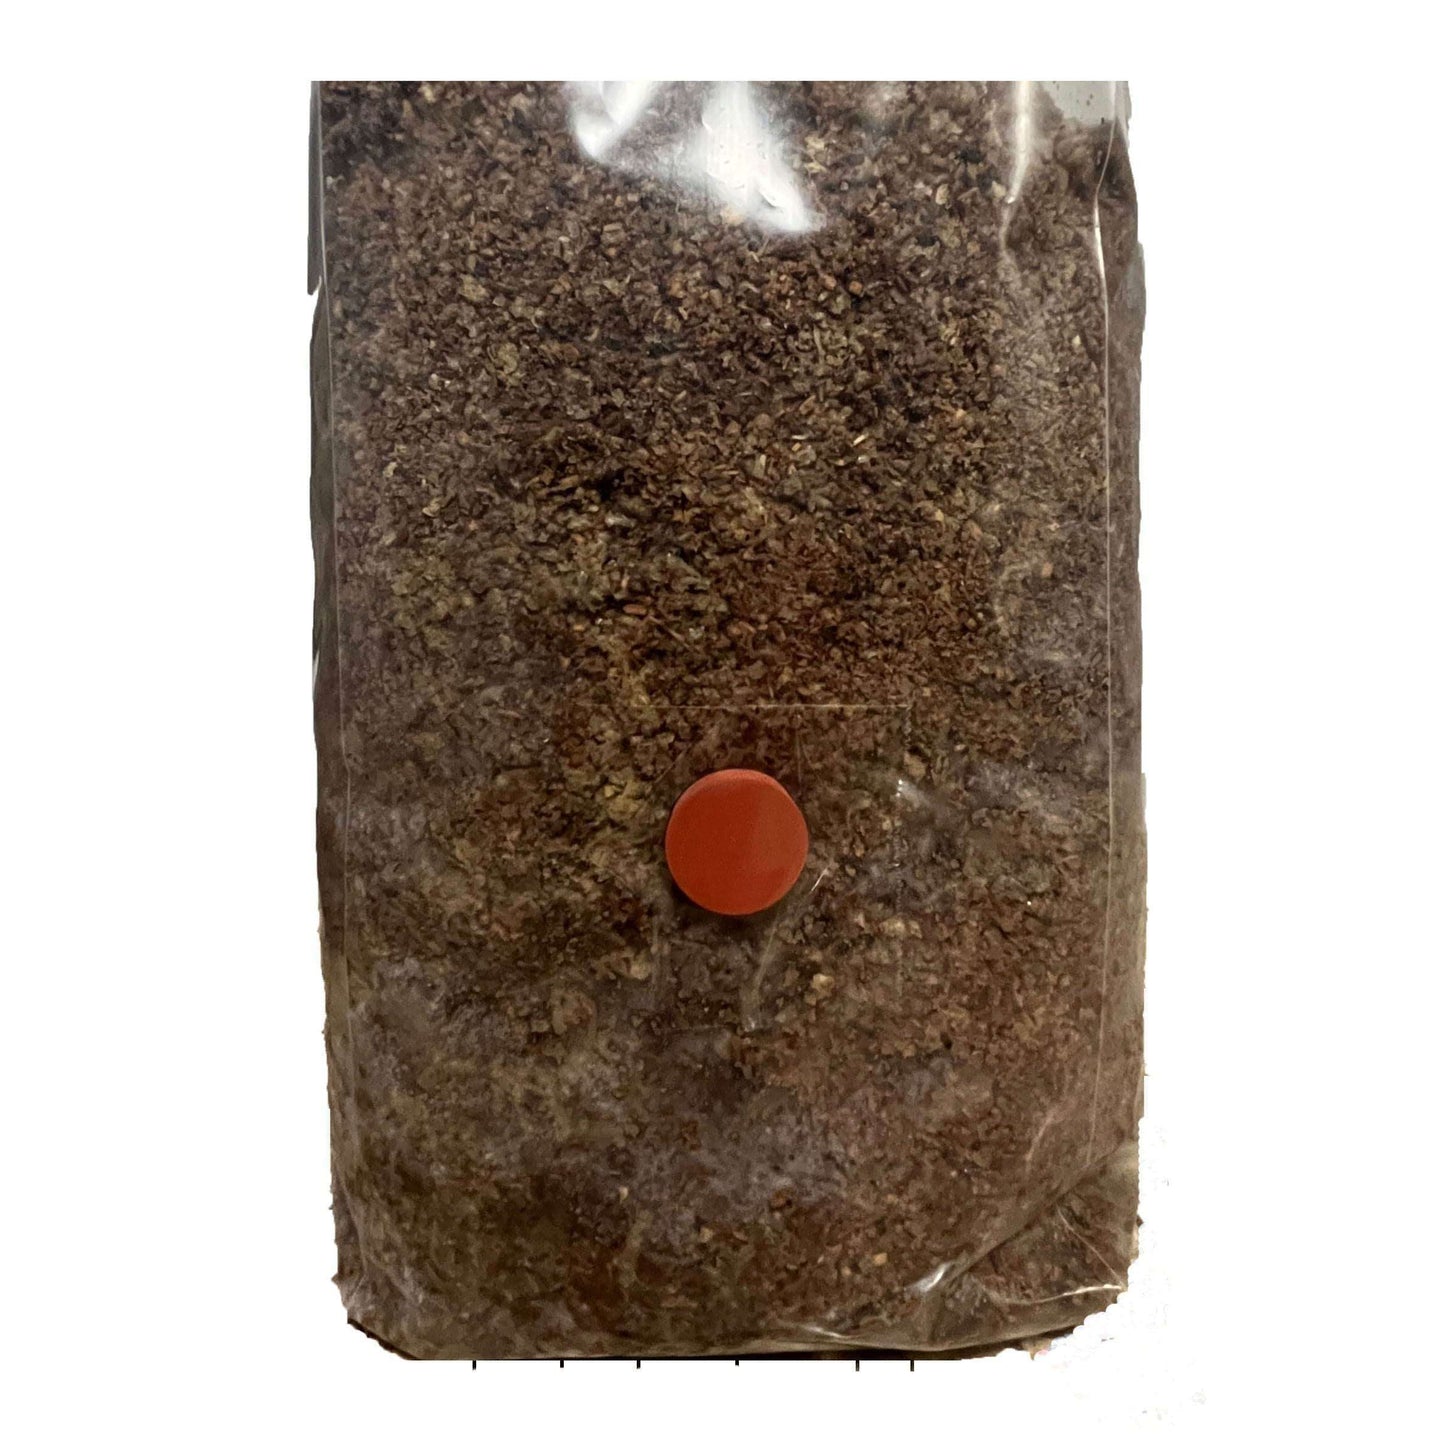 5 lb Wood Based Mushroom Grow Bag with Injection Port